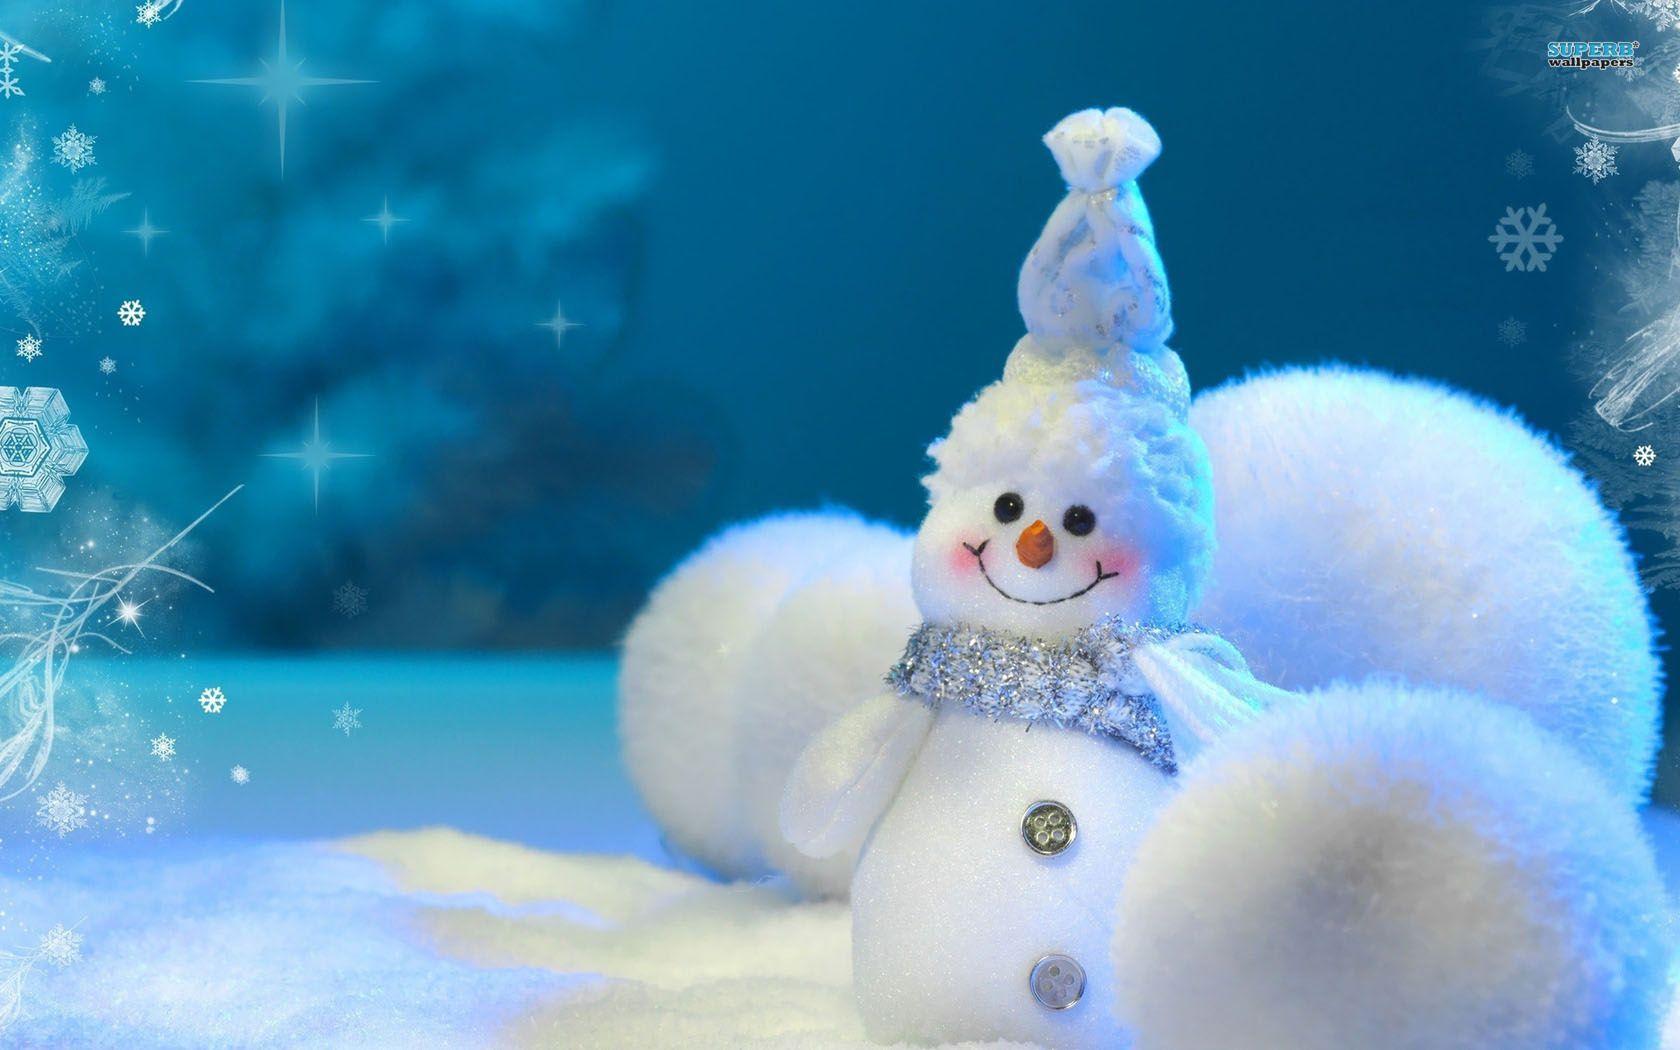 Cute Snowman 6K wallpaper download